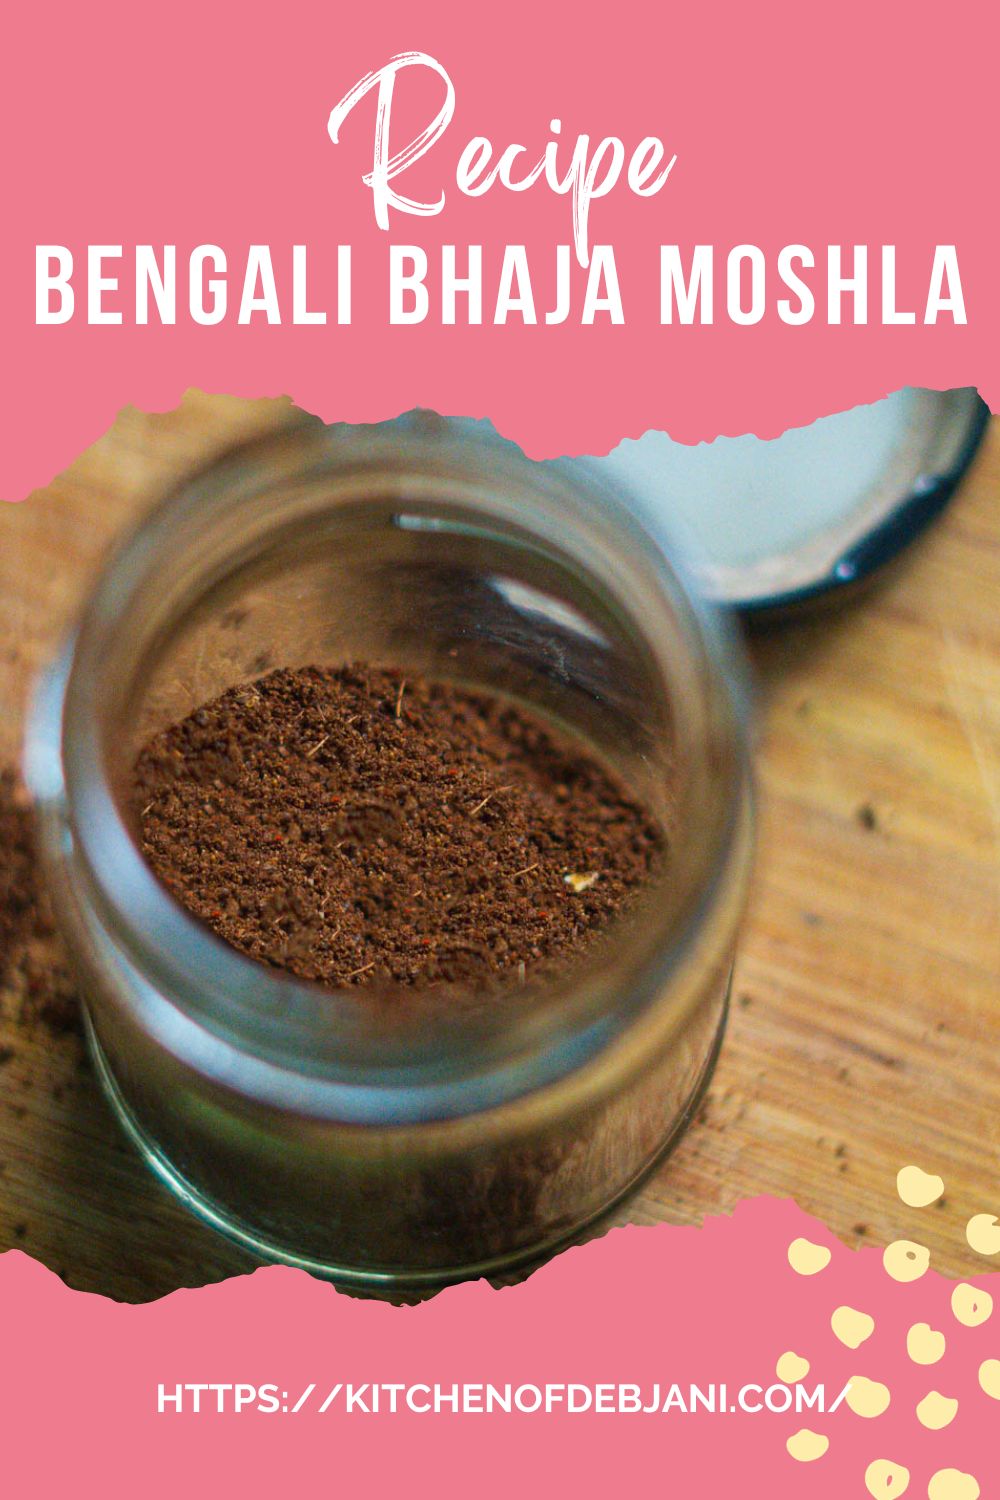 %Bengali spice bhaja moshla recipe Photo Food Pinterest Pin